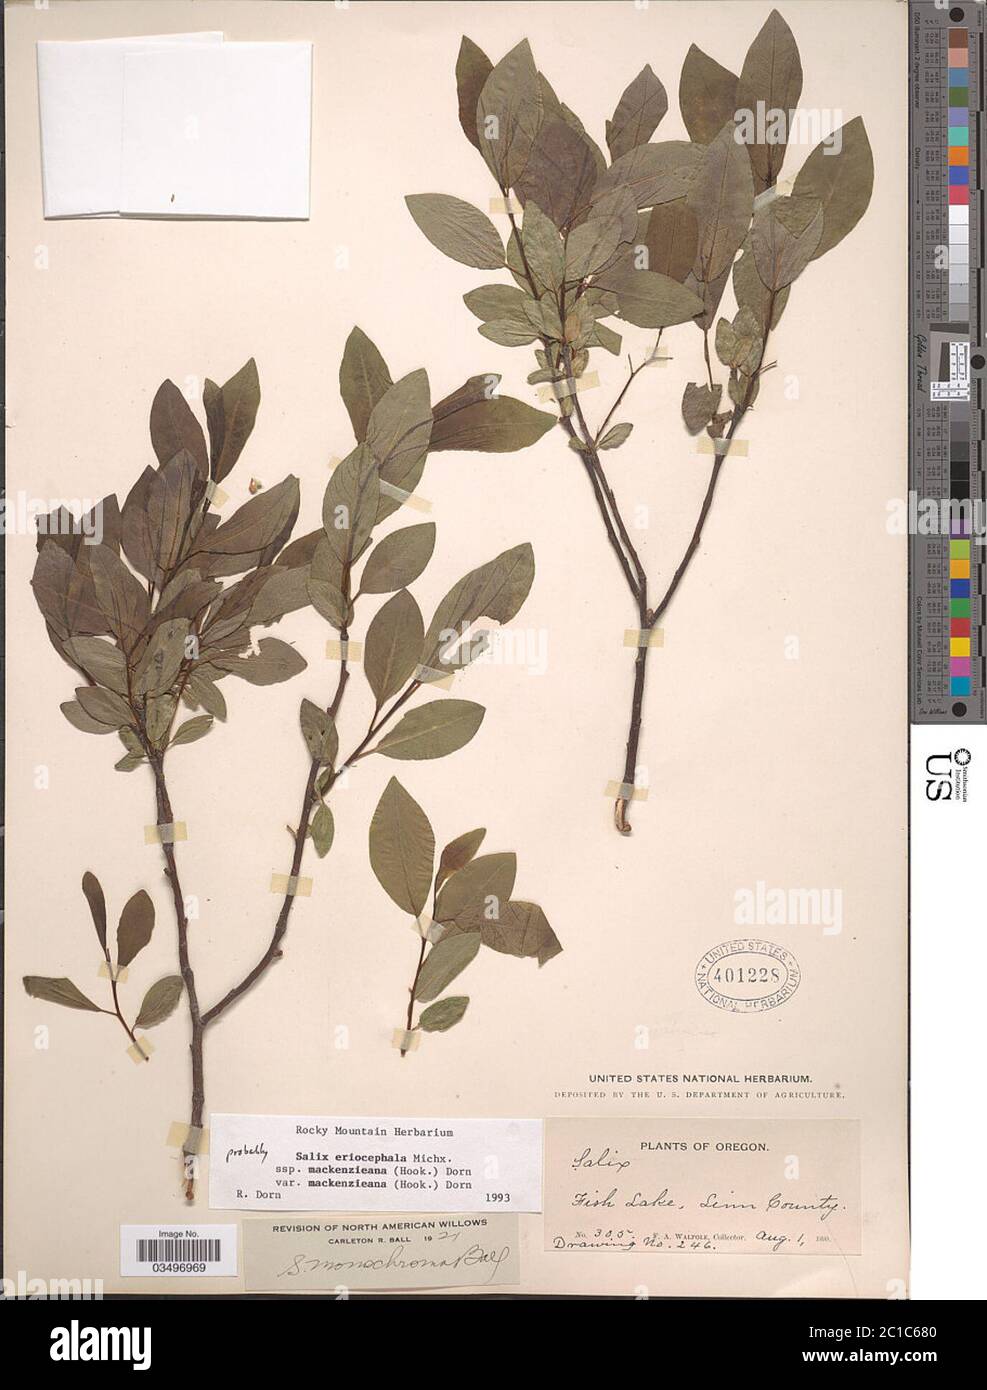 Salix eriocephala subsp mackenziena var mackenzieana Salix eriocephala subsp mackenziena var mackenzieana. Stock Photo